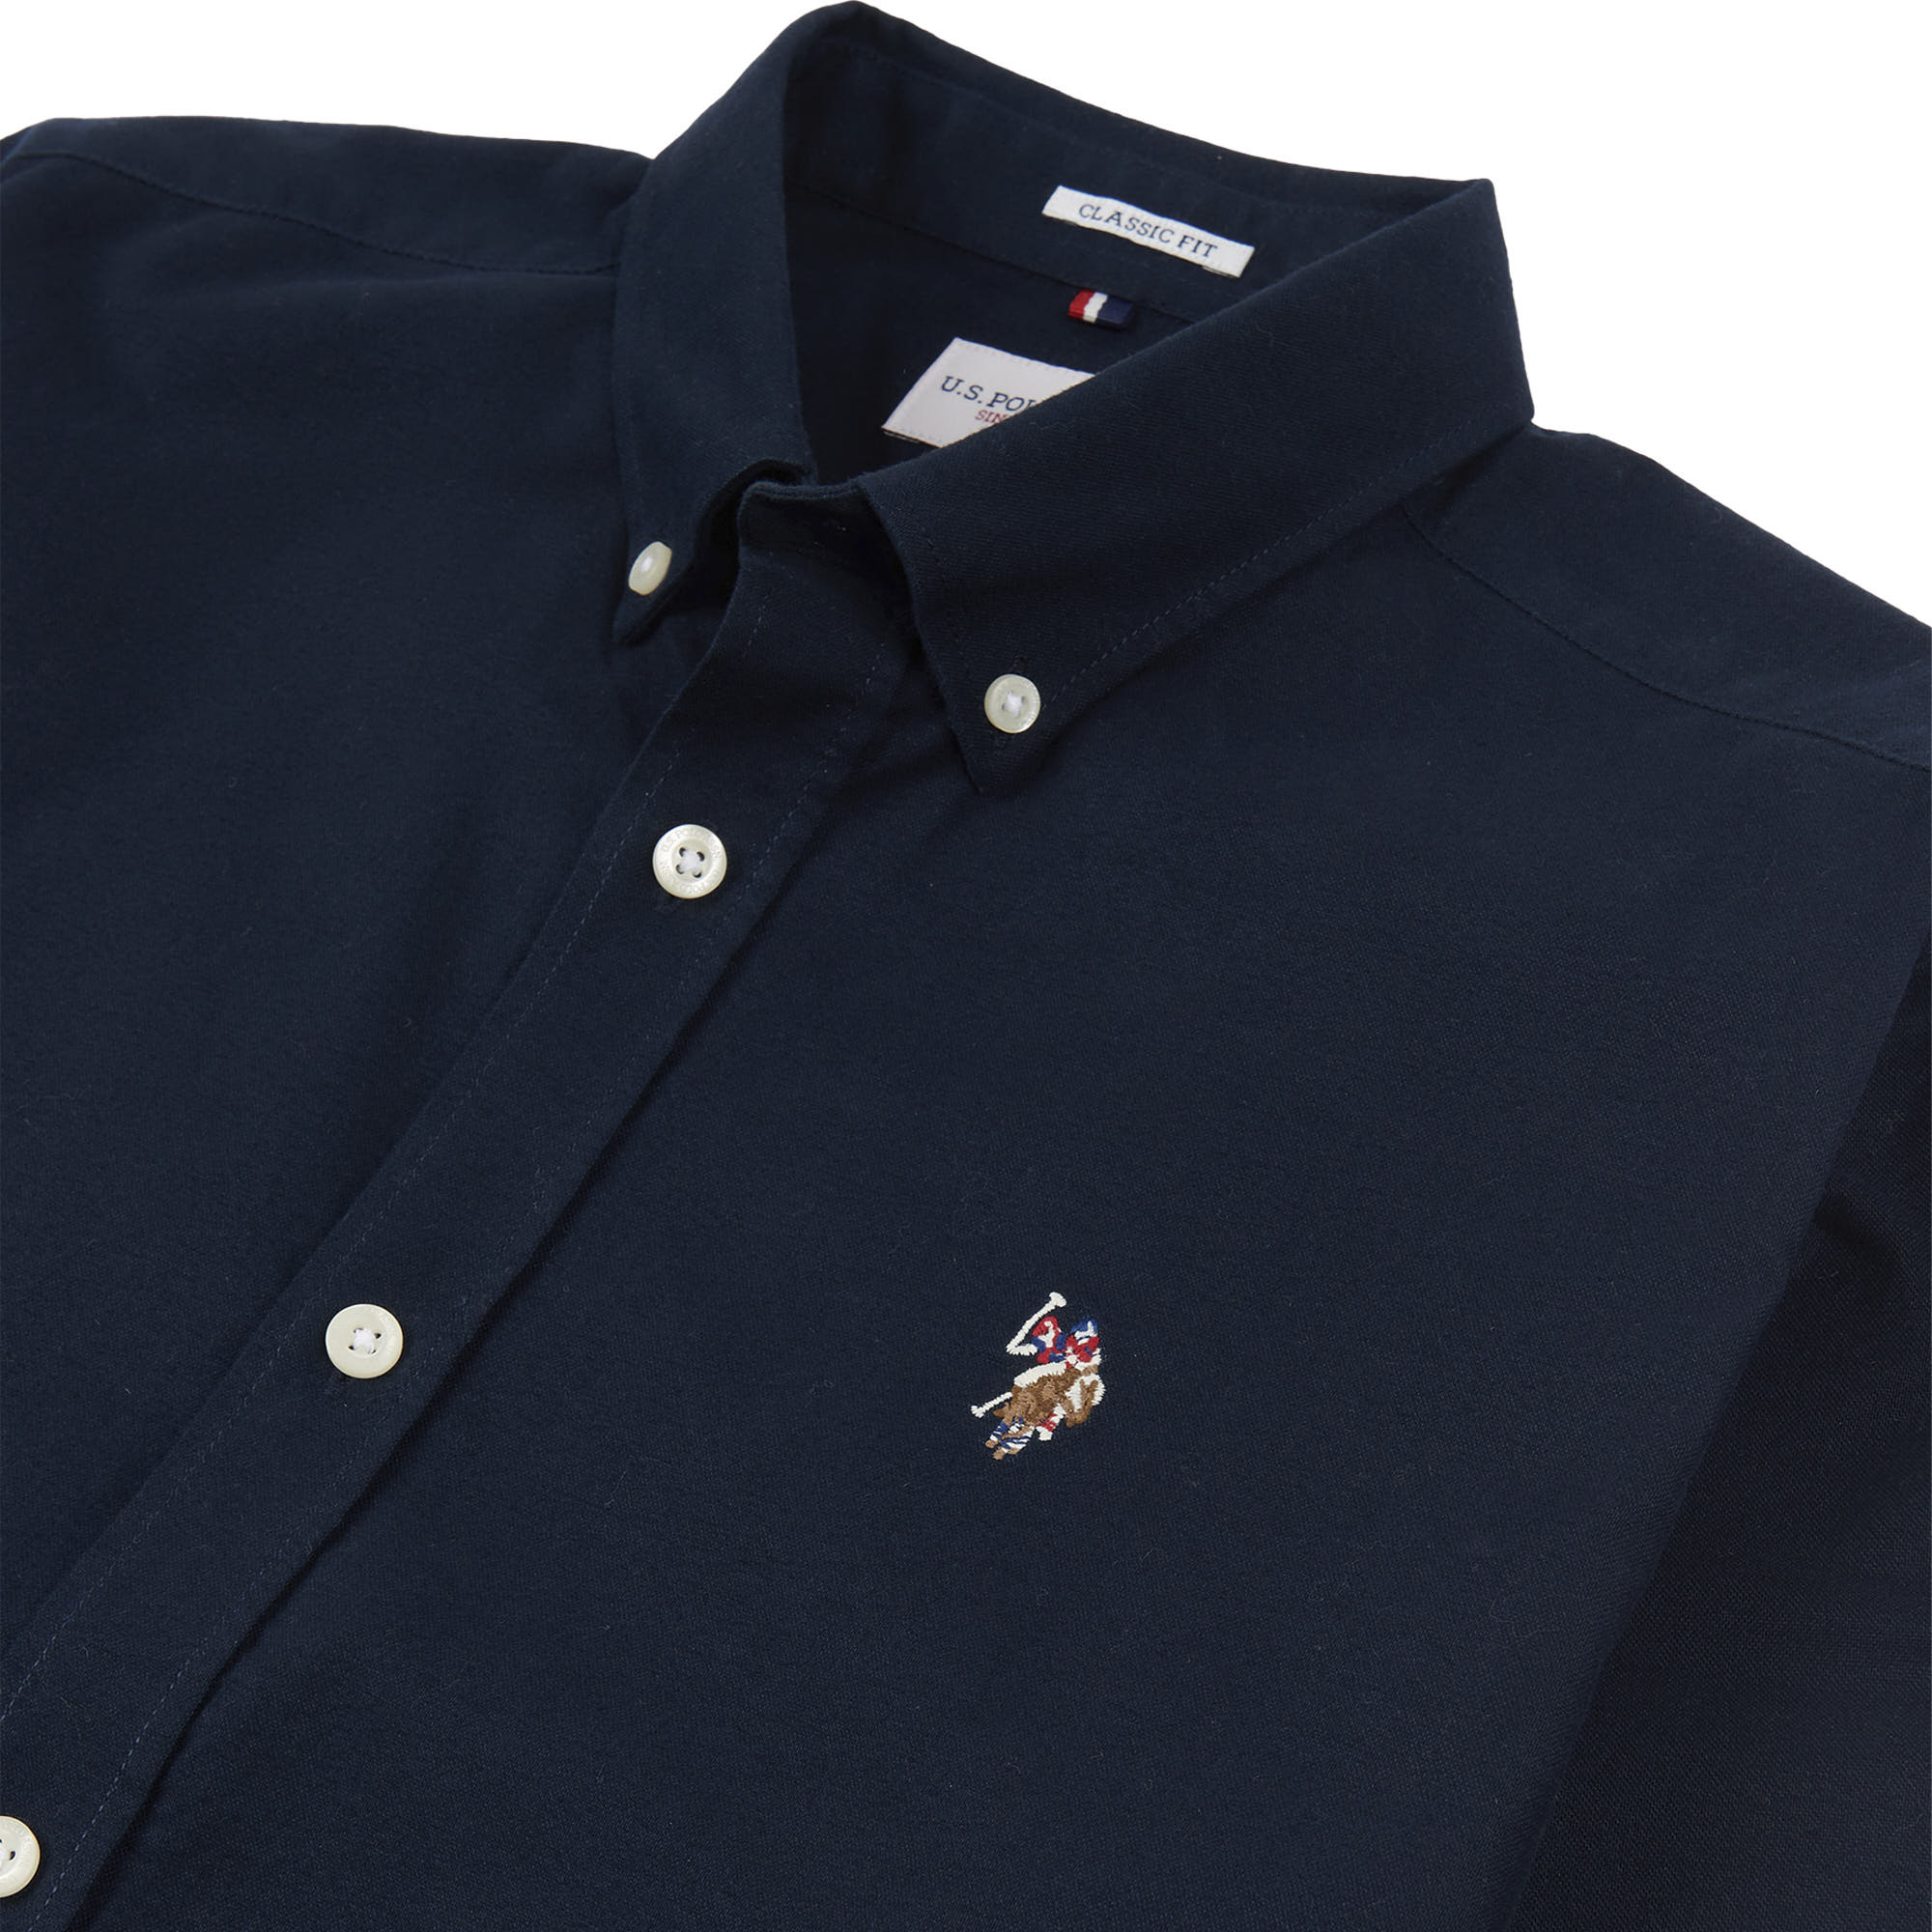 Mens Peached Oxford Shirt in Dark Sapphire Navy